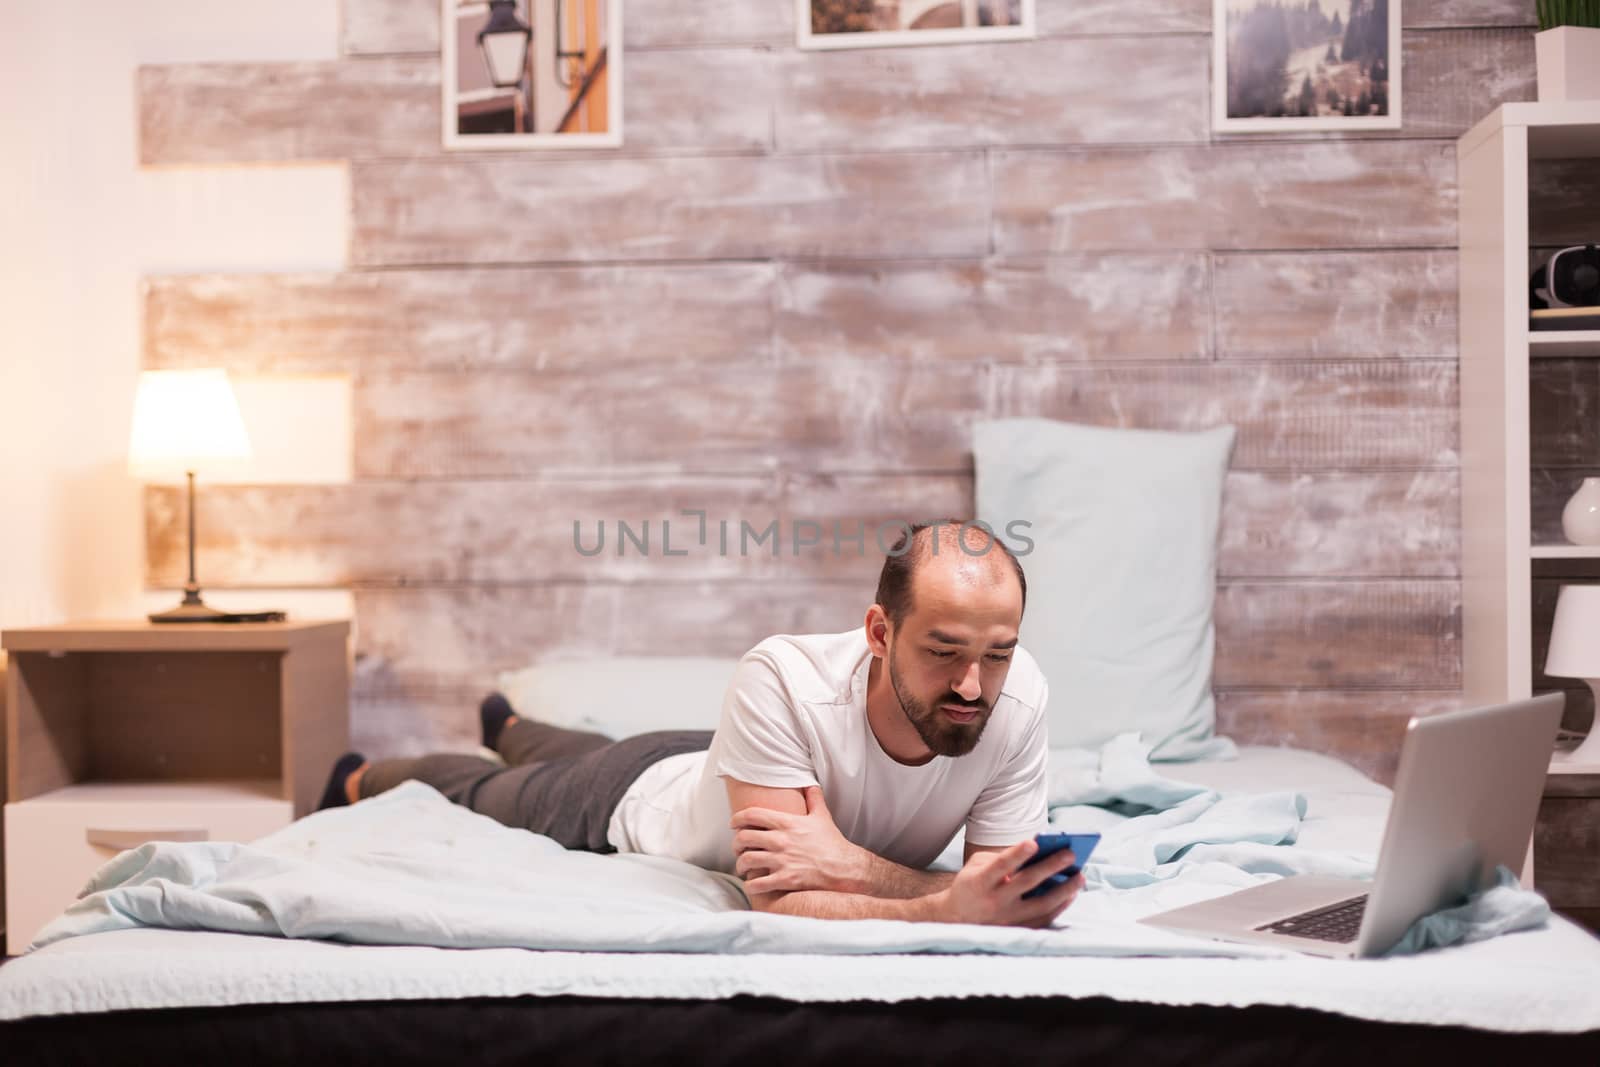 Man in bed at night wearing pajamas by DCStudio